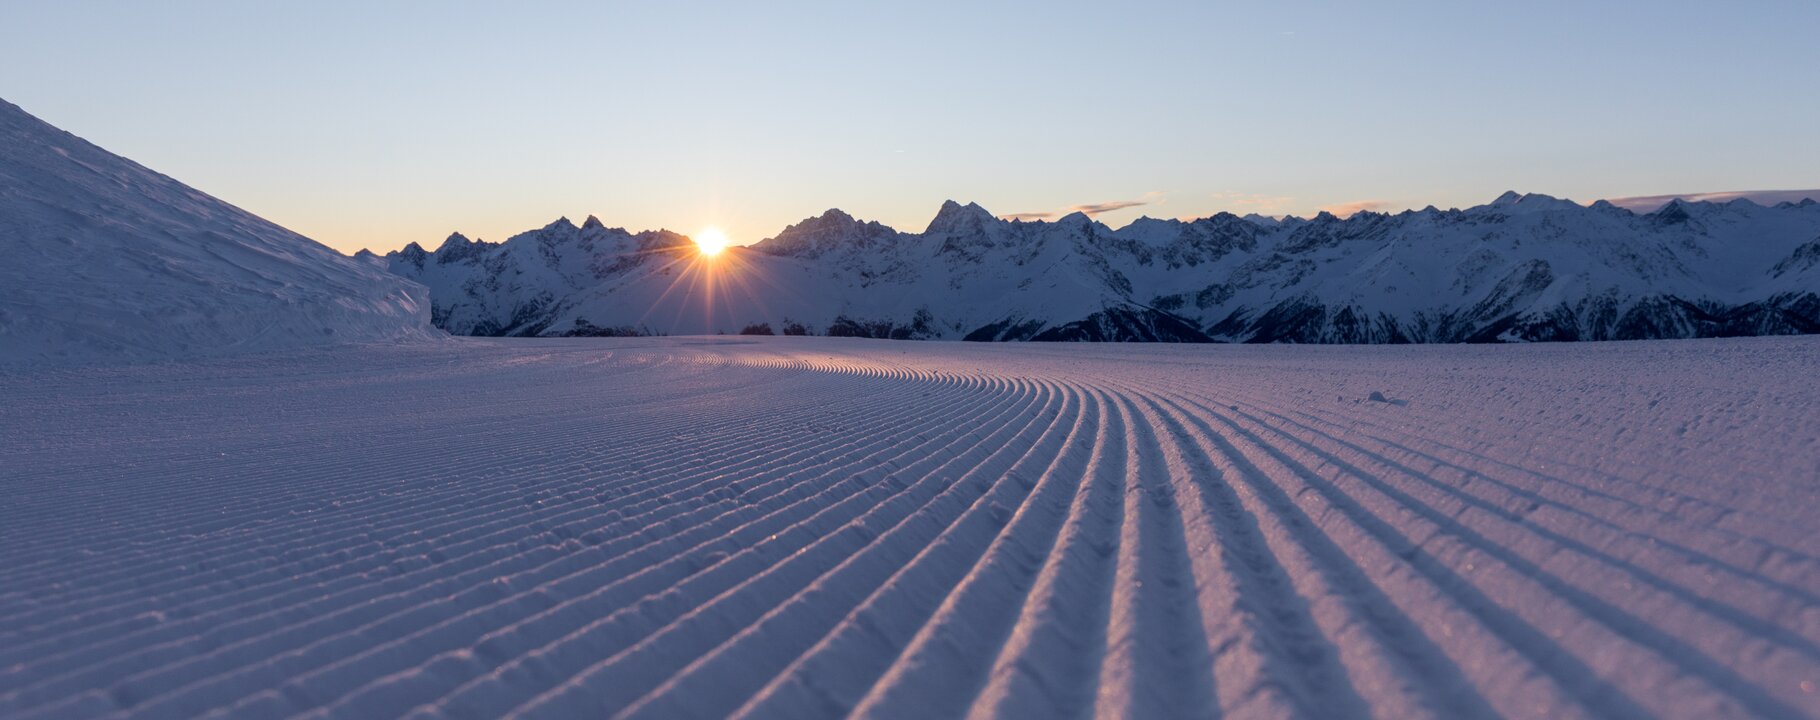 Piste im Sonnenaufgang in Serfaus-Fiss-Ladis in Tirol | © Fisser Bergbahnen GmbH | Andreas Kirschner